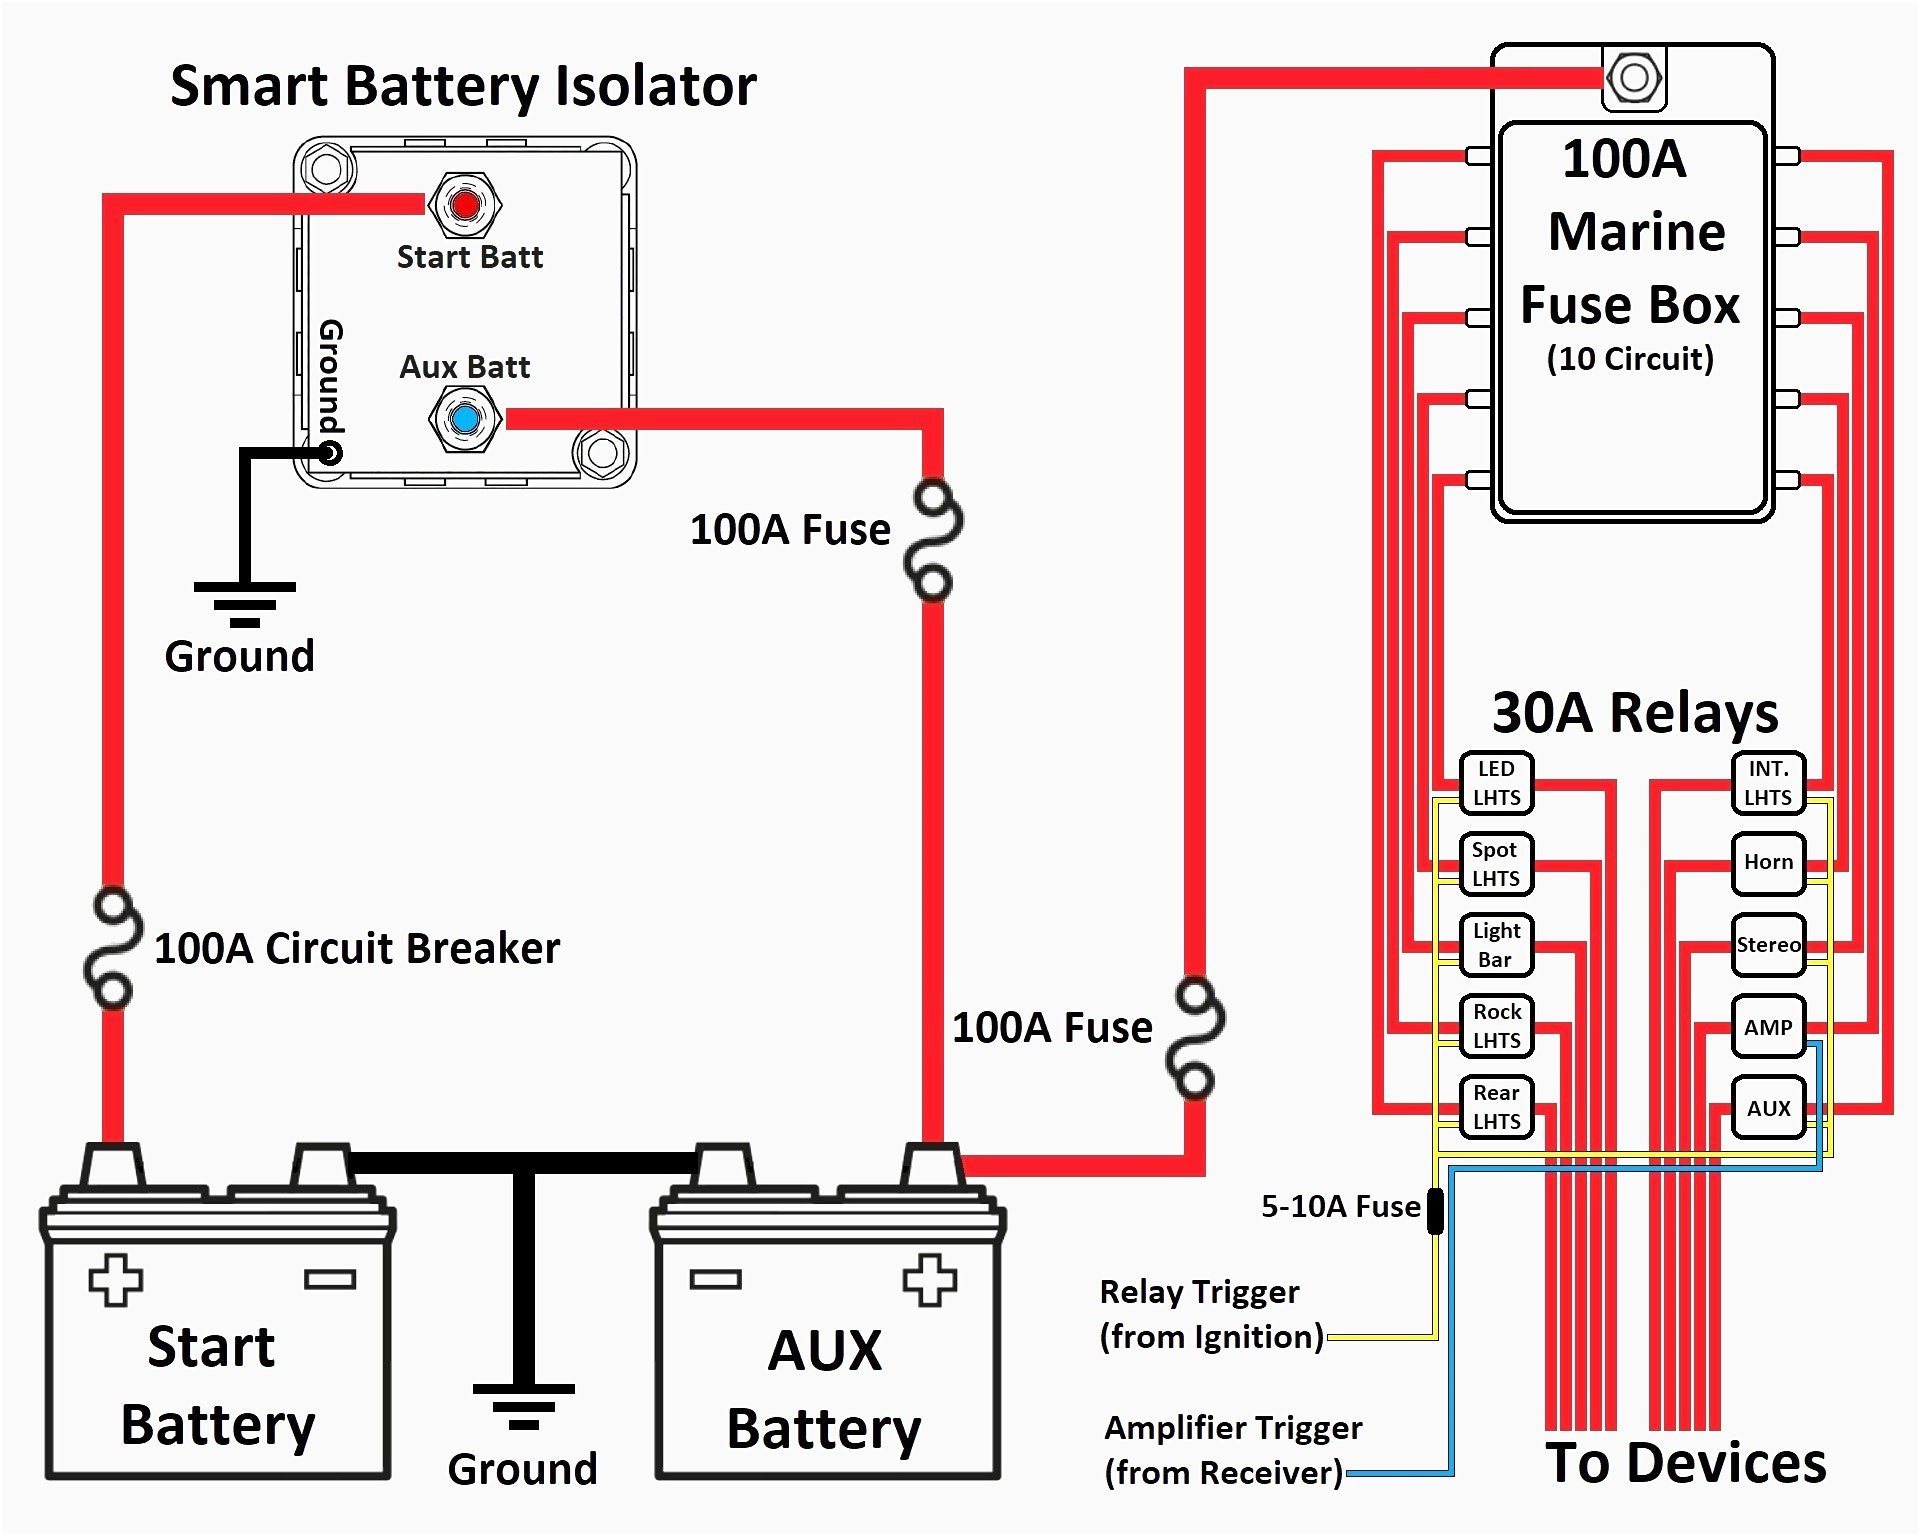 Battery isolator Wiring Diagram New Battery isolator Wiring Diagram Webtor Ideas Collection Battery